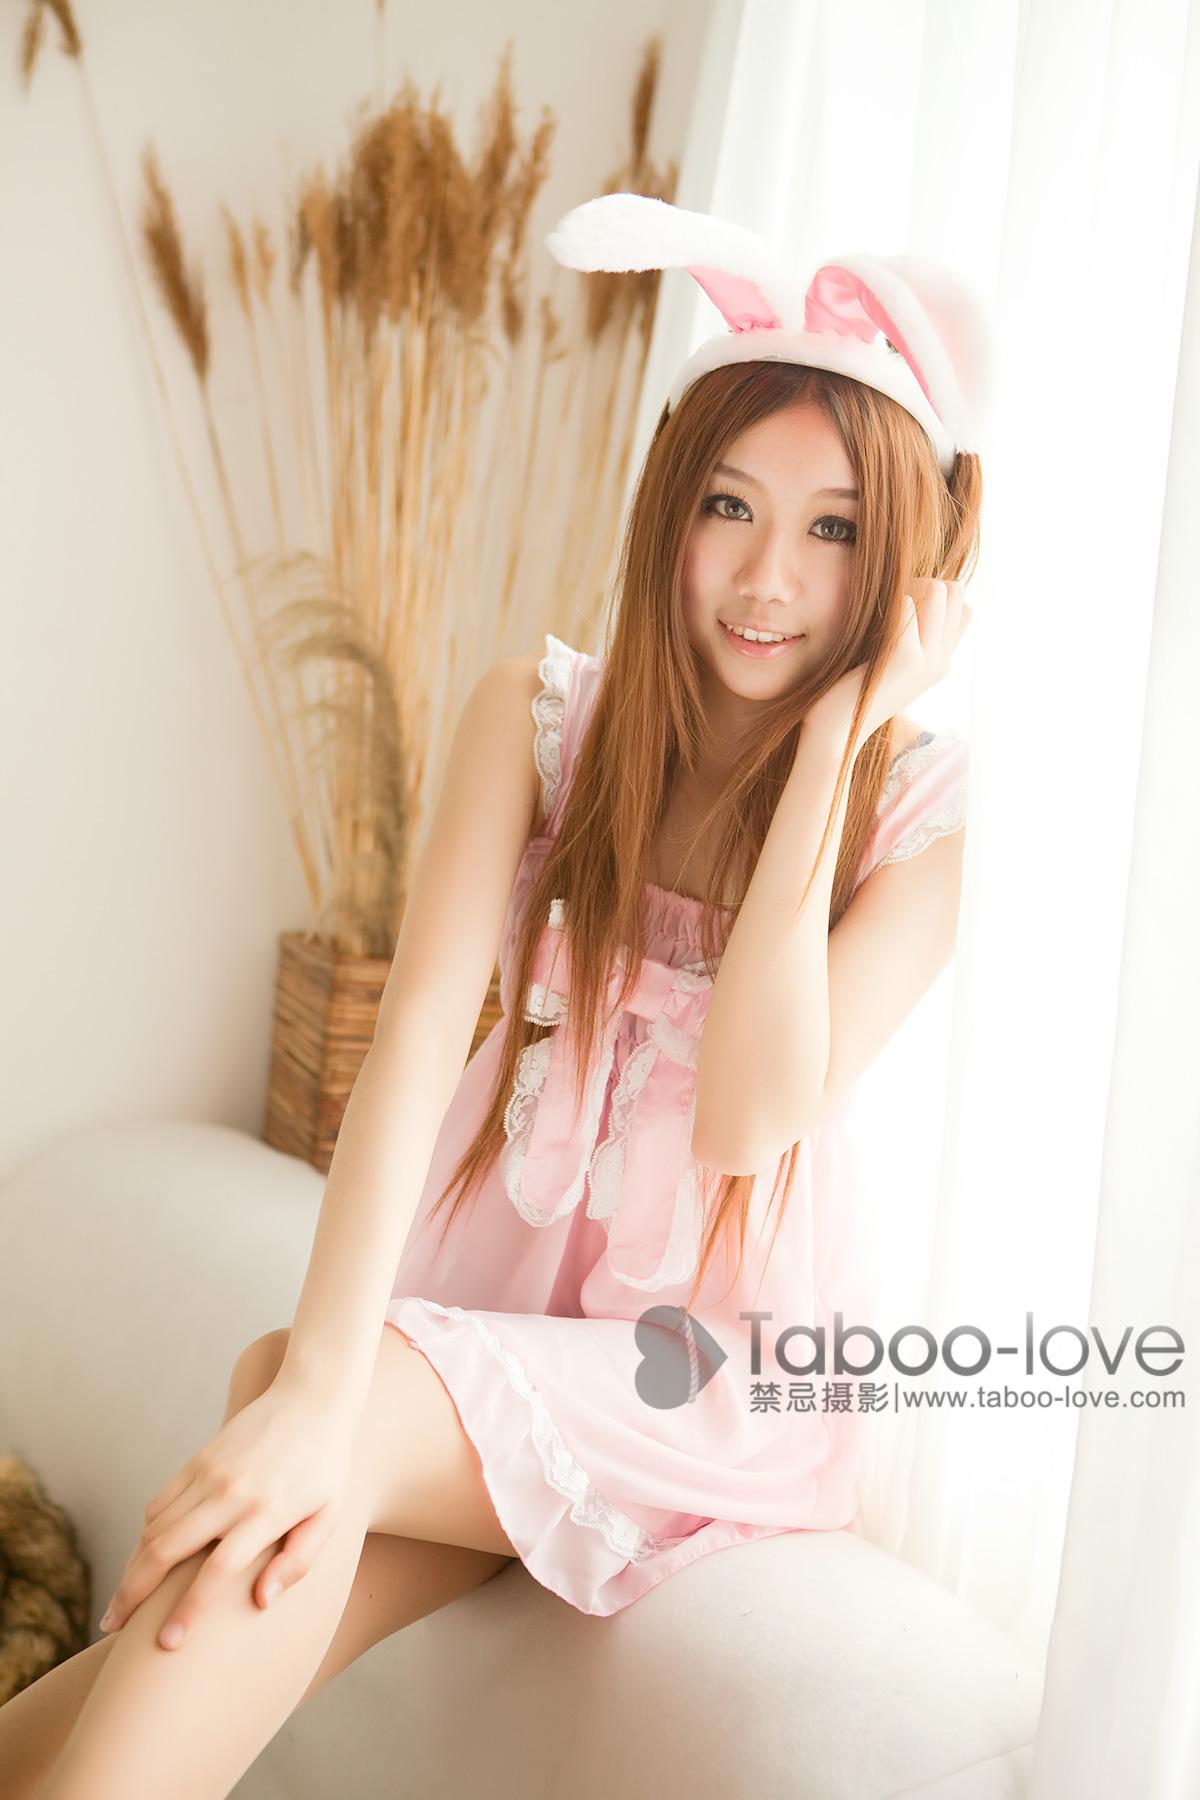 Taboo-love NO.081 Cici 暖洋洋的粉色纯美 禁忌攝影繩藝 - 17.jpg